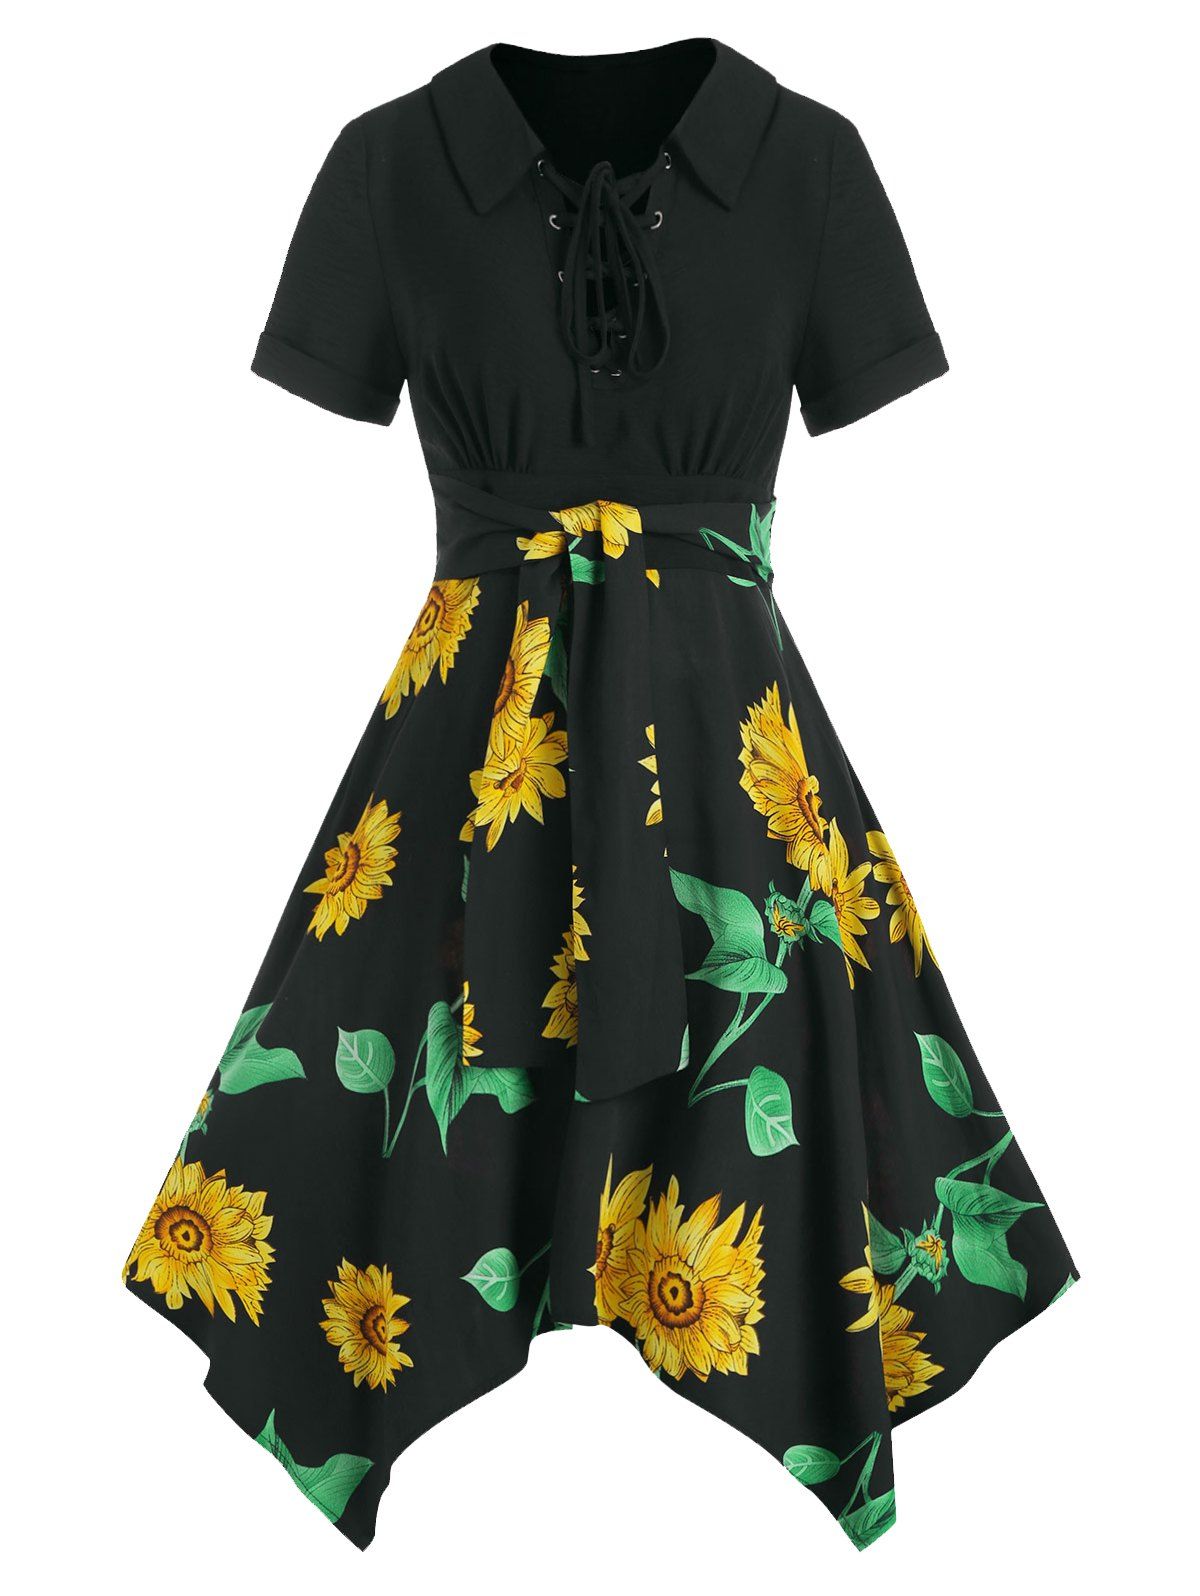 Sunflower Print Fit And Flare Dress Lace Up Bowknot Combo Dress Short Sleeve Asymmetric Handkerchief Dress - BLACK XXXL